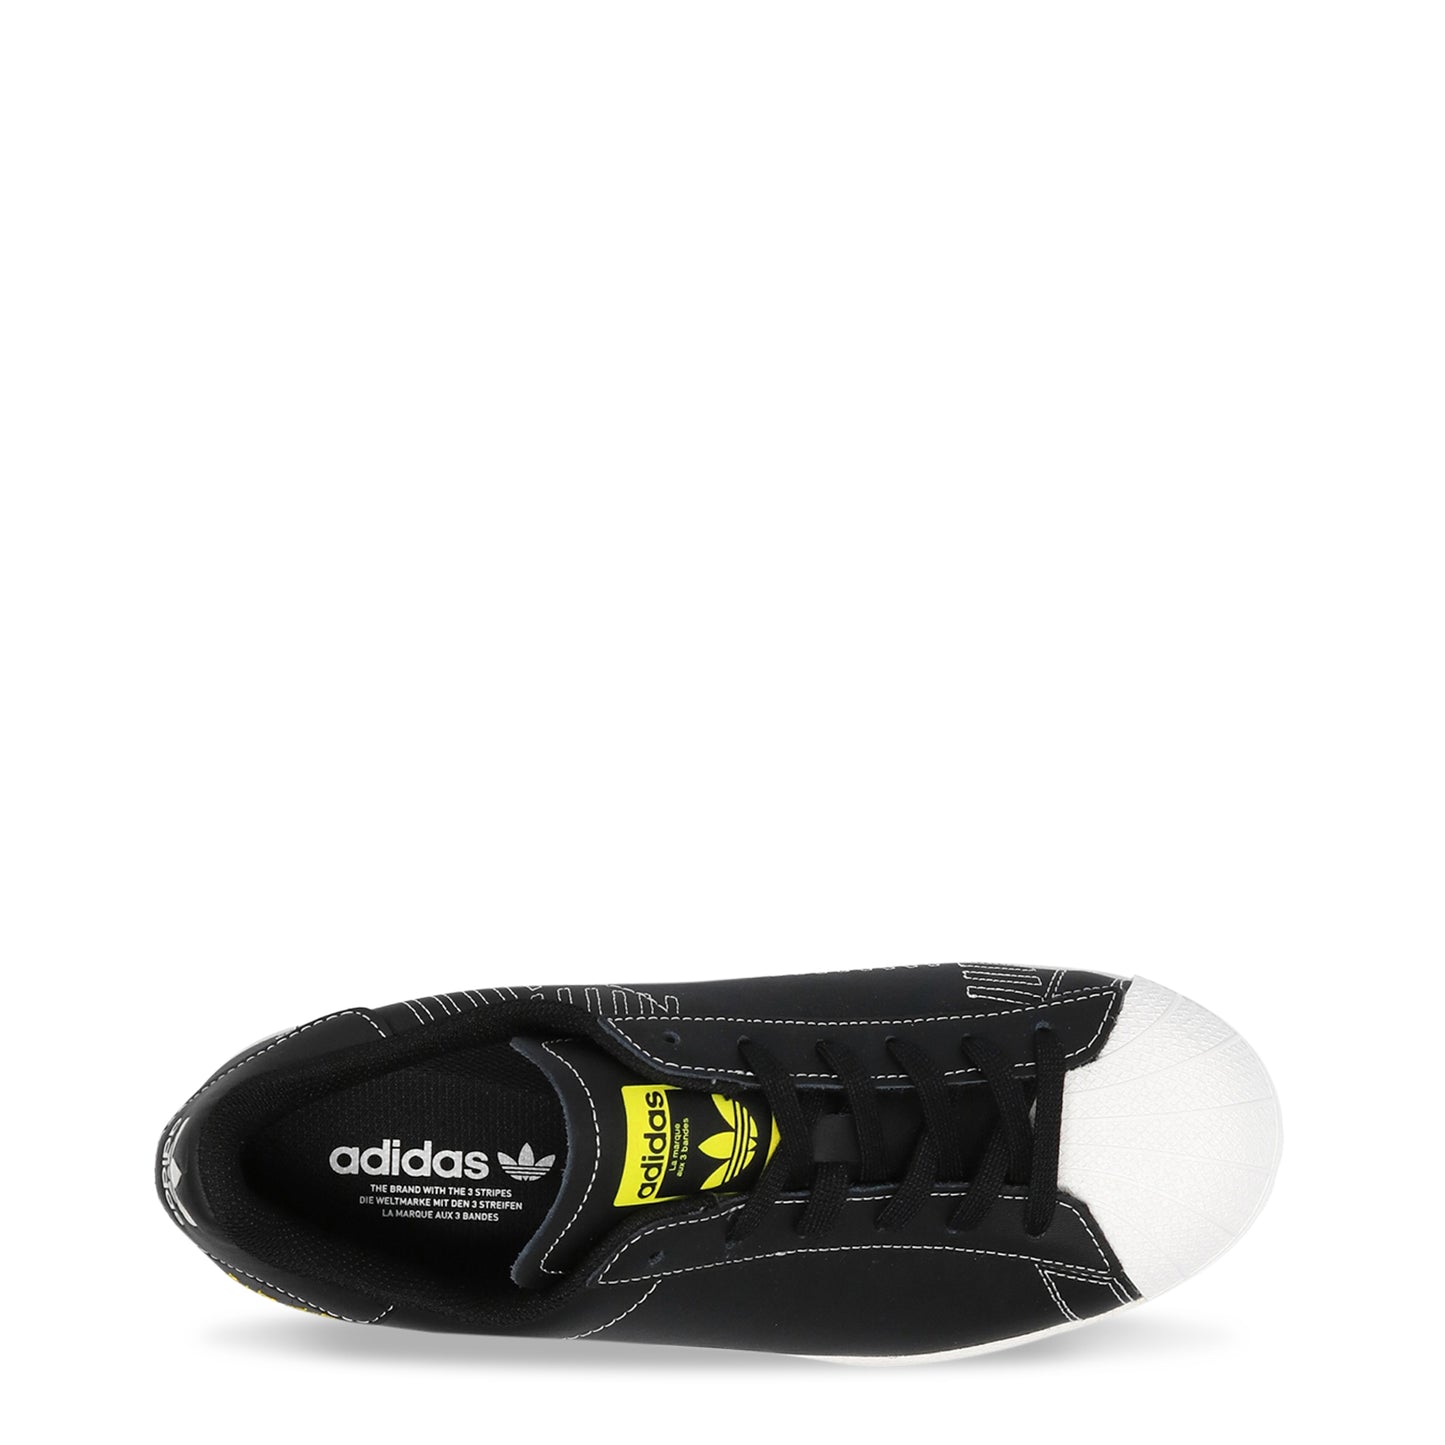 Adidas SuperstarPure Donna Nero 110709. Colore: Nero, Taglia: UK 4.5